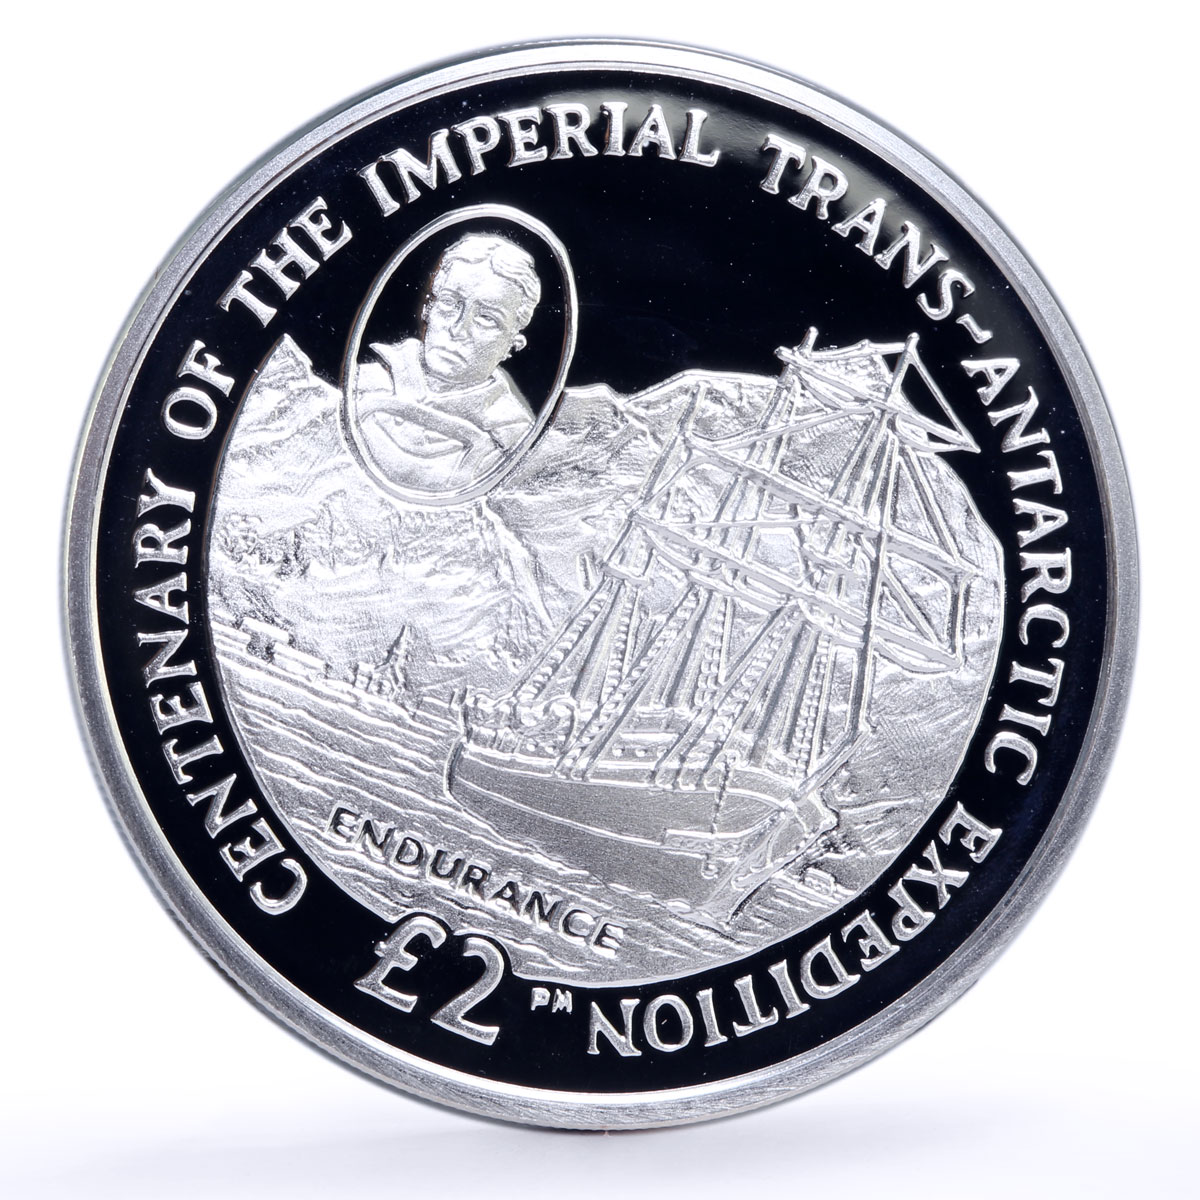 Sandwich Islands 2 pounds Seafaring Endurance Ship Clipper silver coin 2014